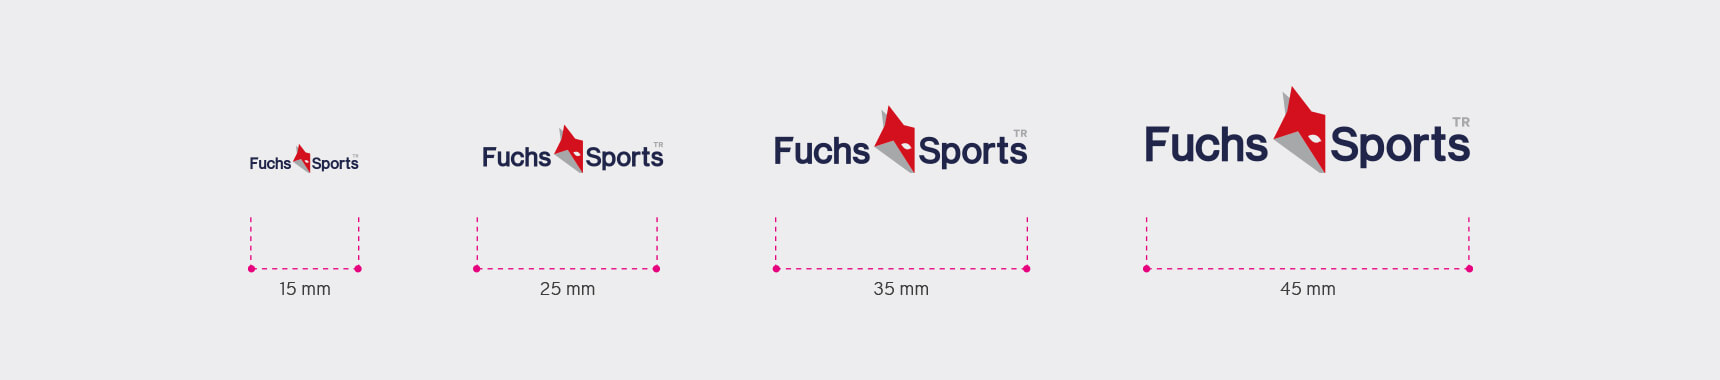 Fuchs Sports-------